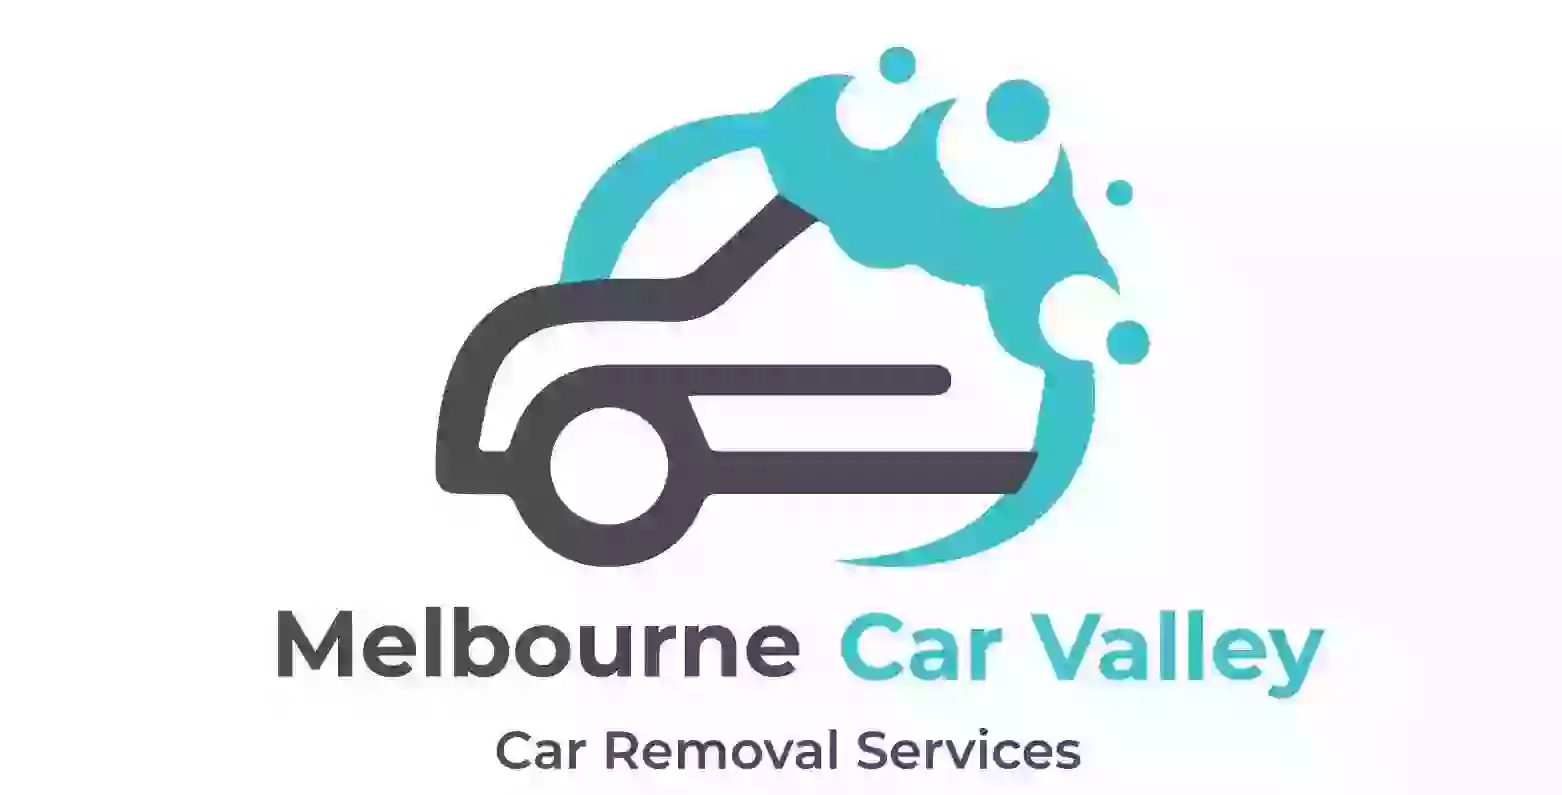  Melbourne Car
                Valley Newlands Car Removal Footer Logo 